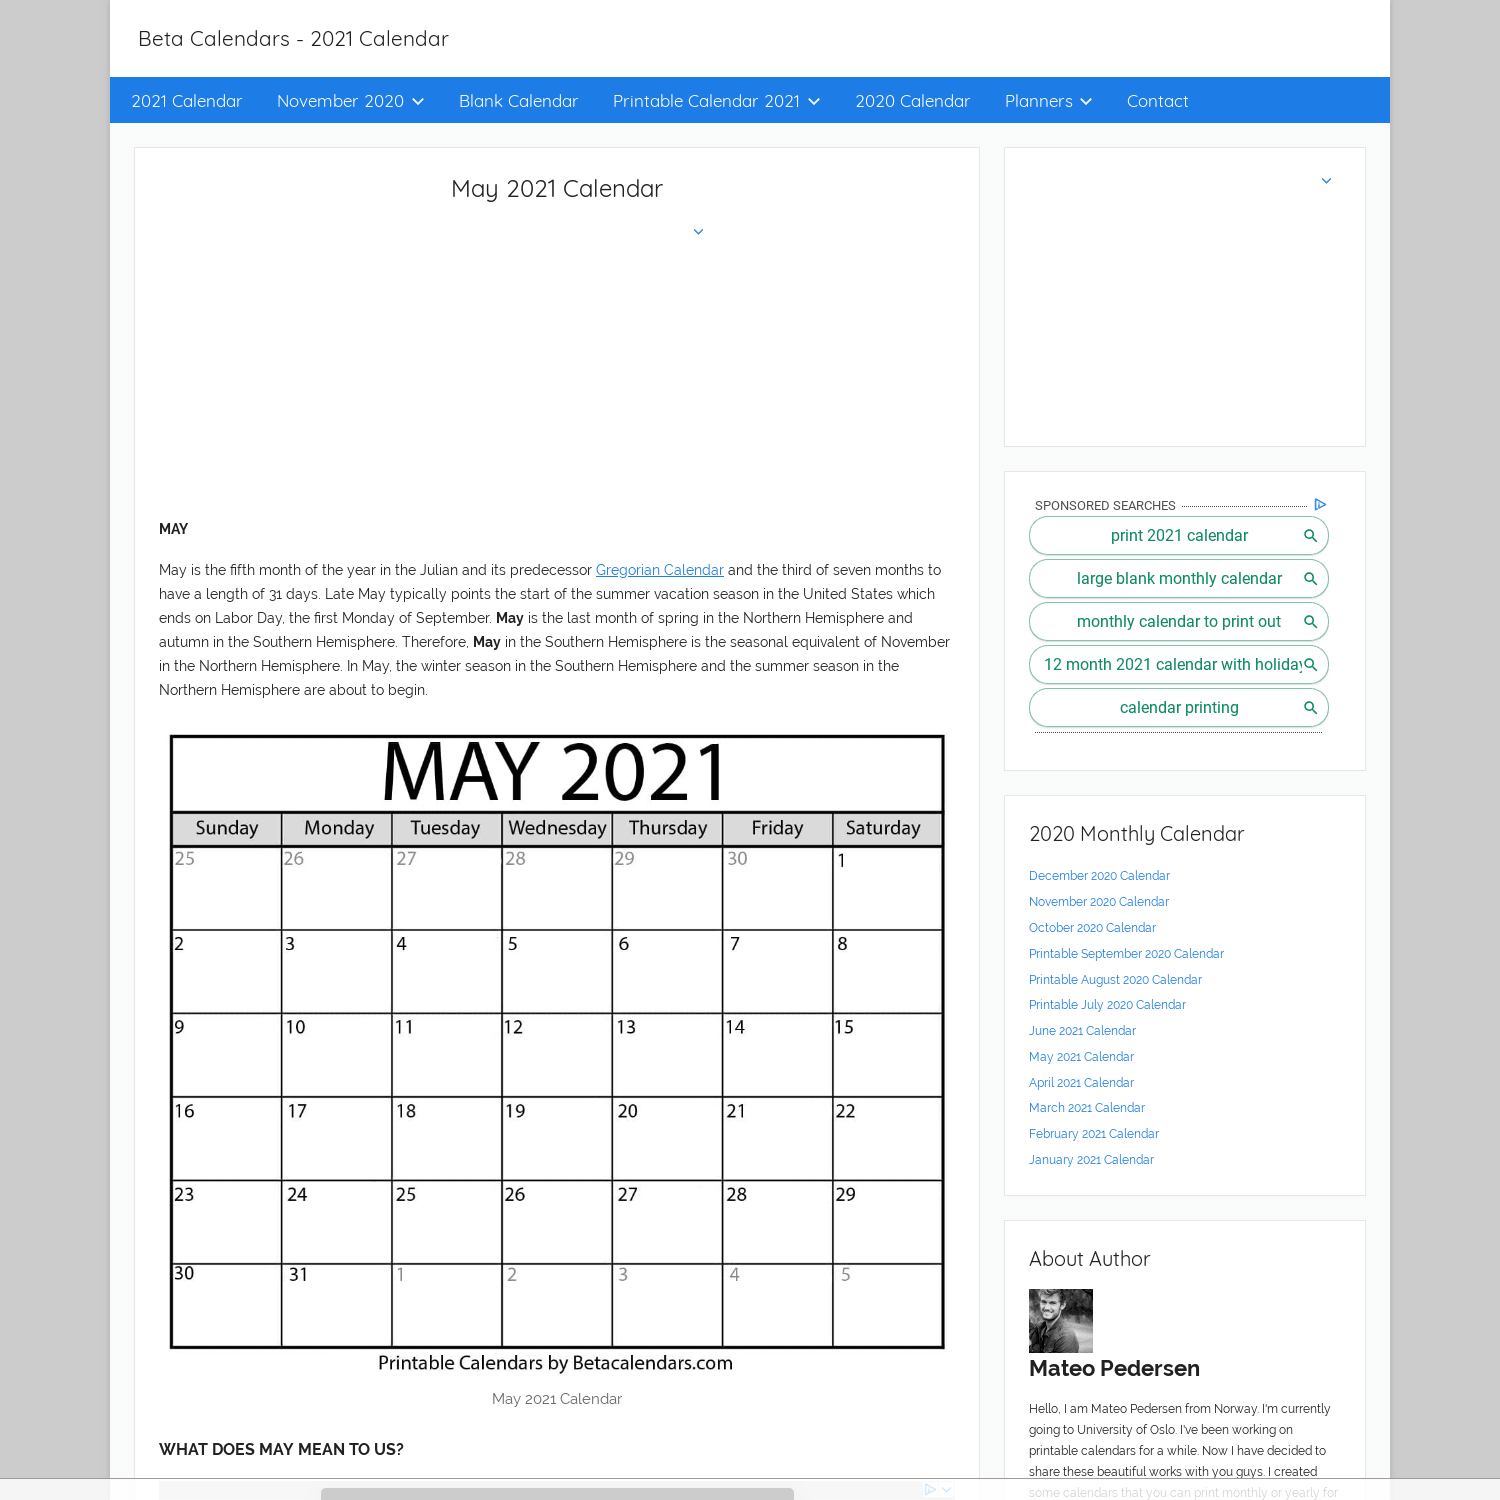 May 2021 calendar | blank printable monthly calendars